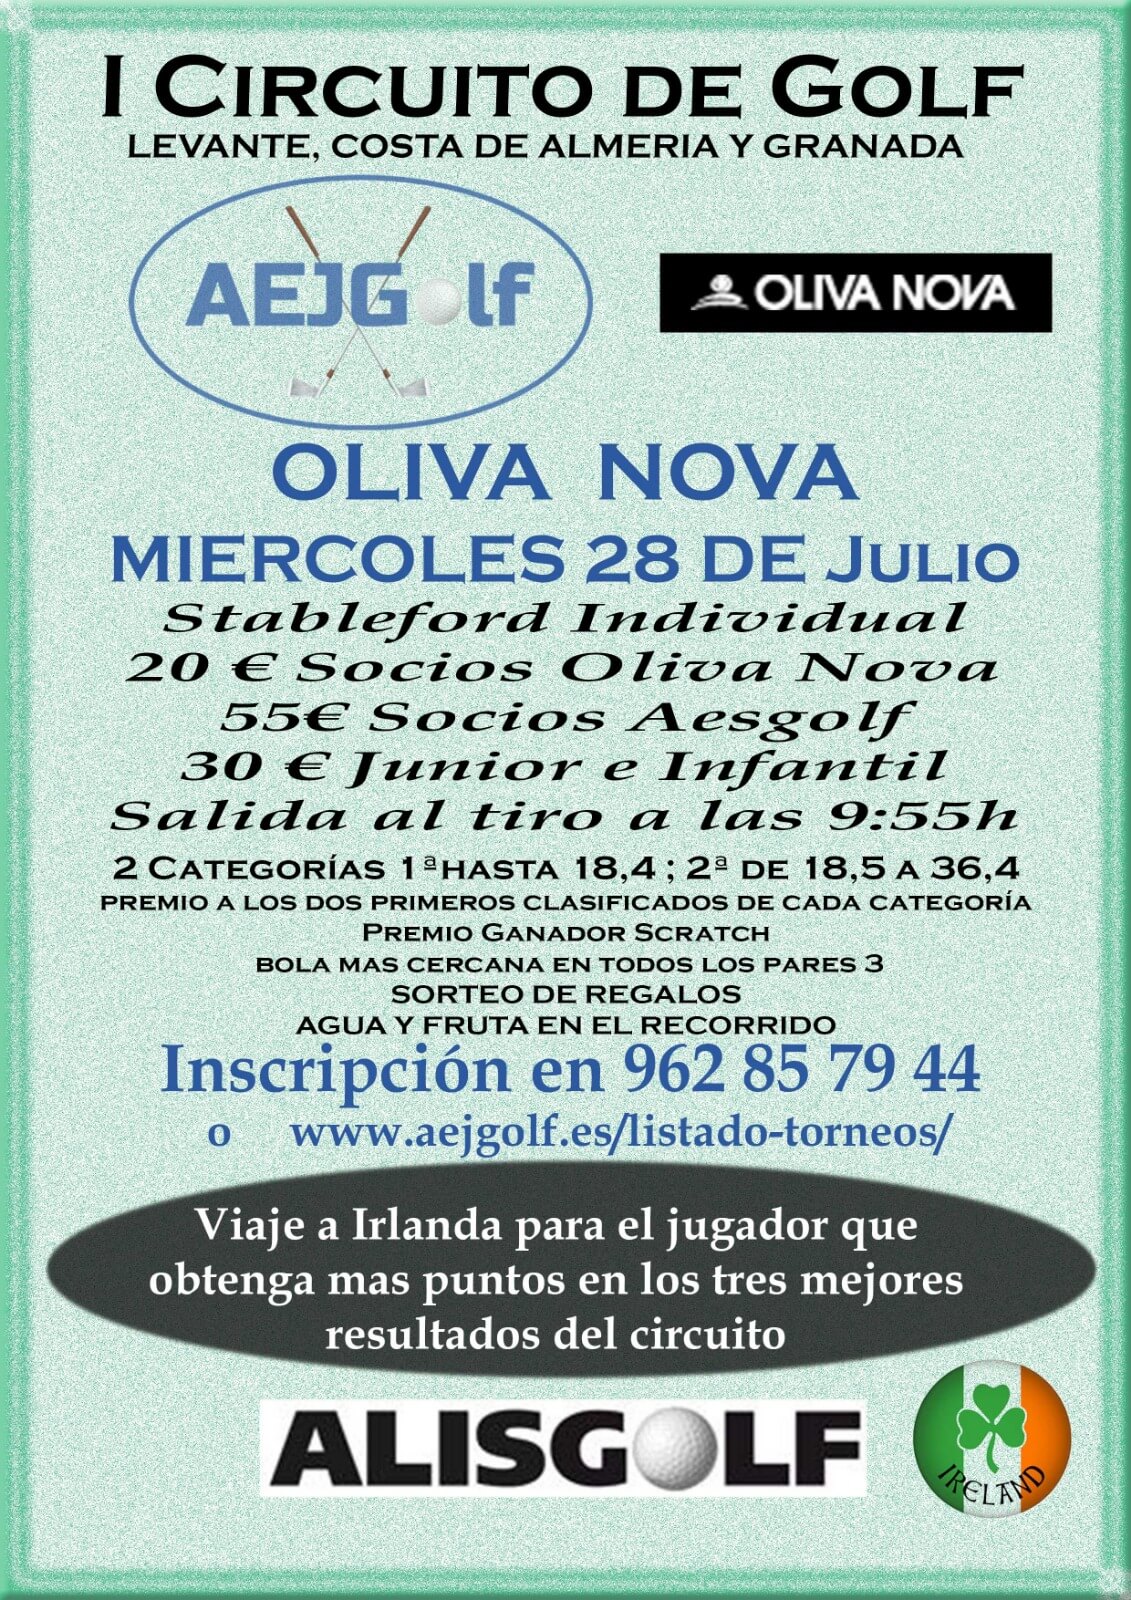 I CIRCUITO DE GOLF LEVANTE, COSTA DE ALMERIA Y GRANADA OLIVA NOVA